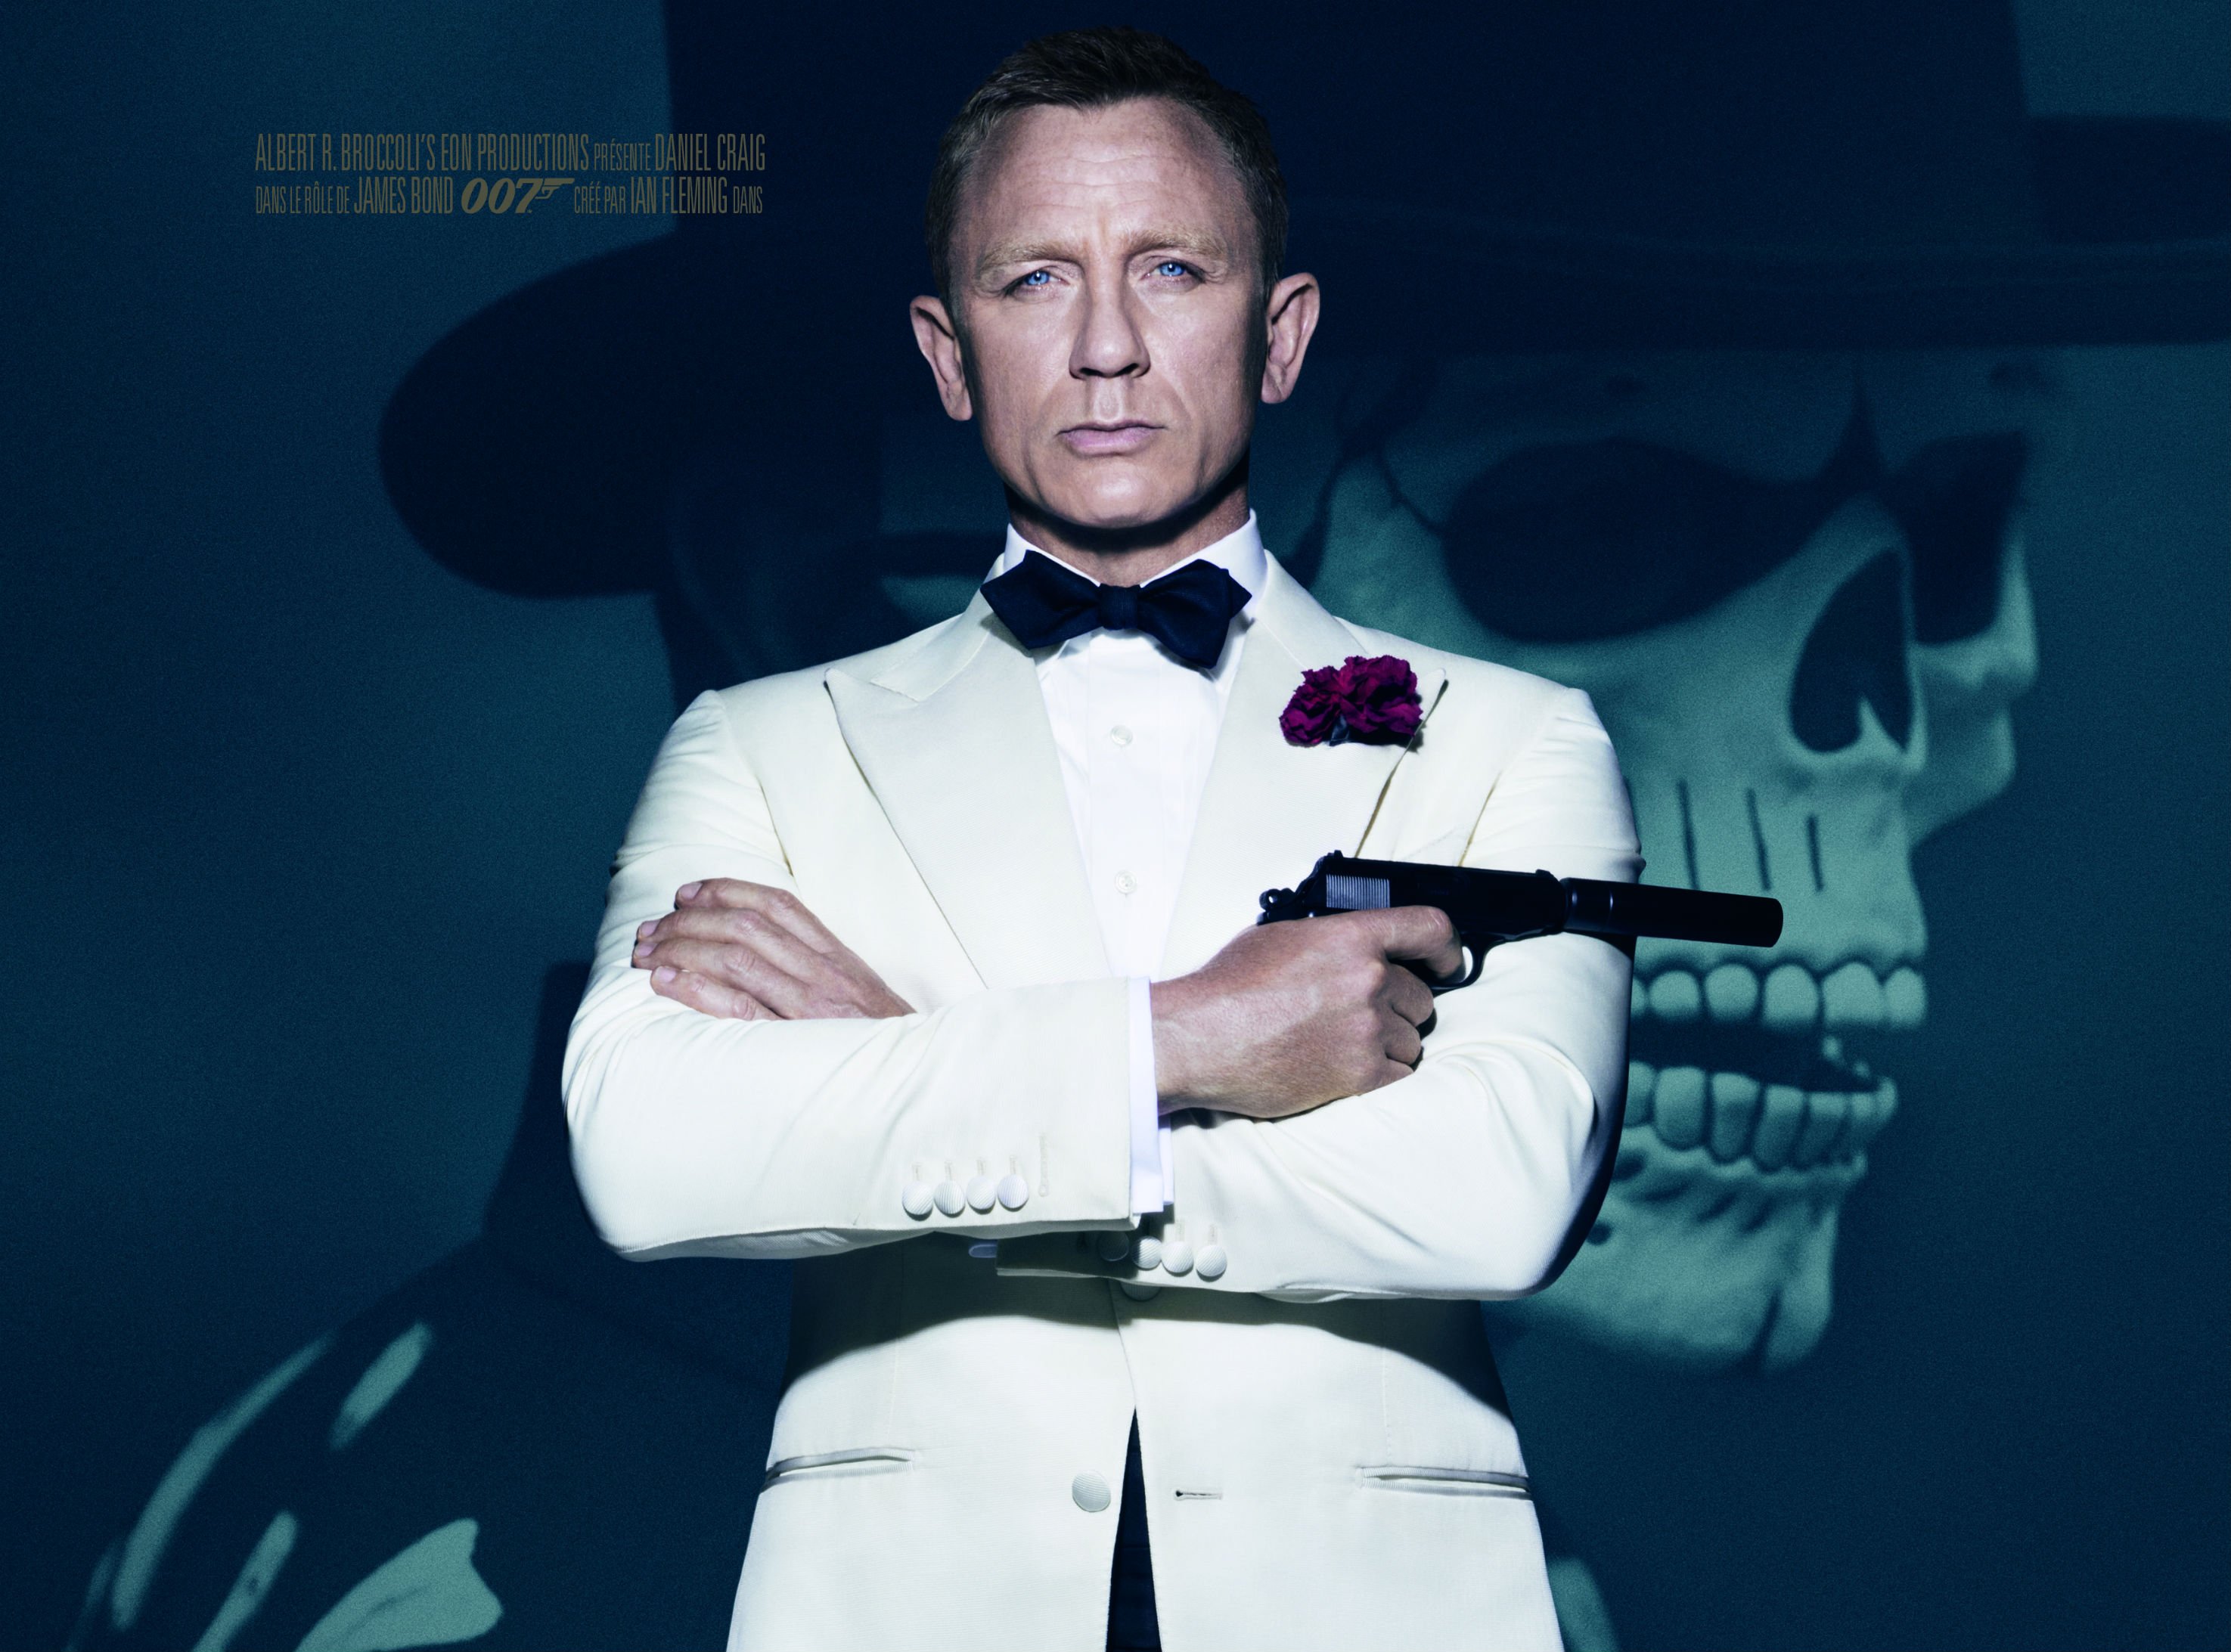 Spectre Bond James Action 1spectre Crime Mystery Spy Thriller